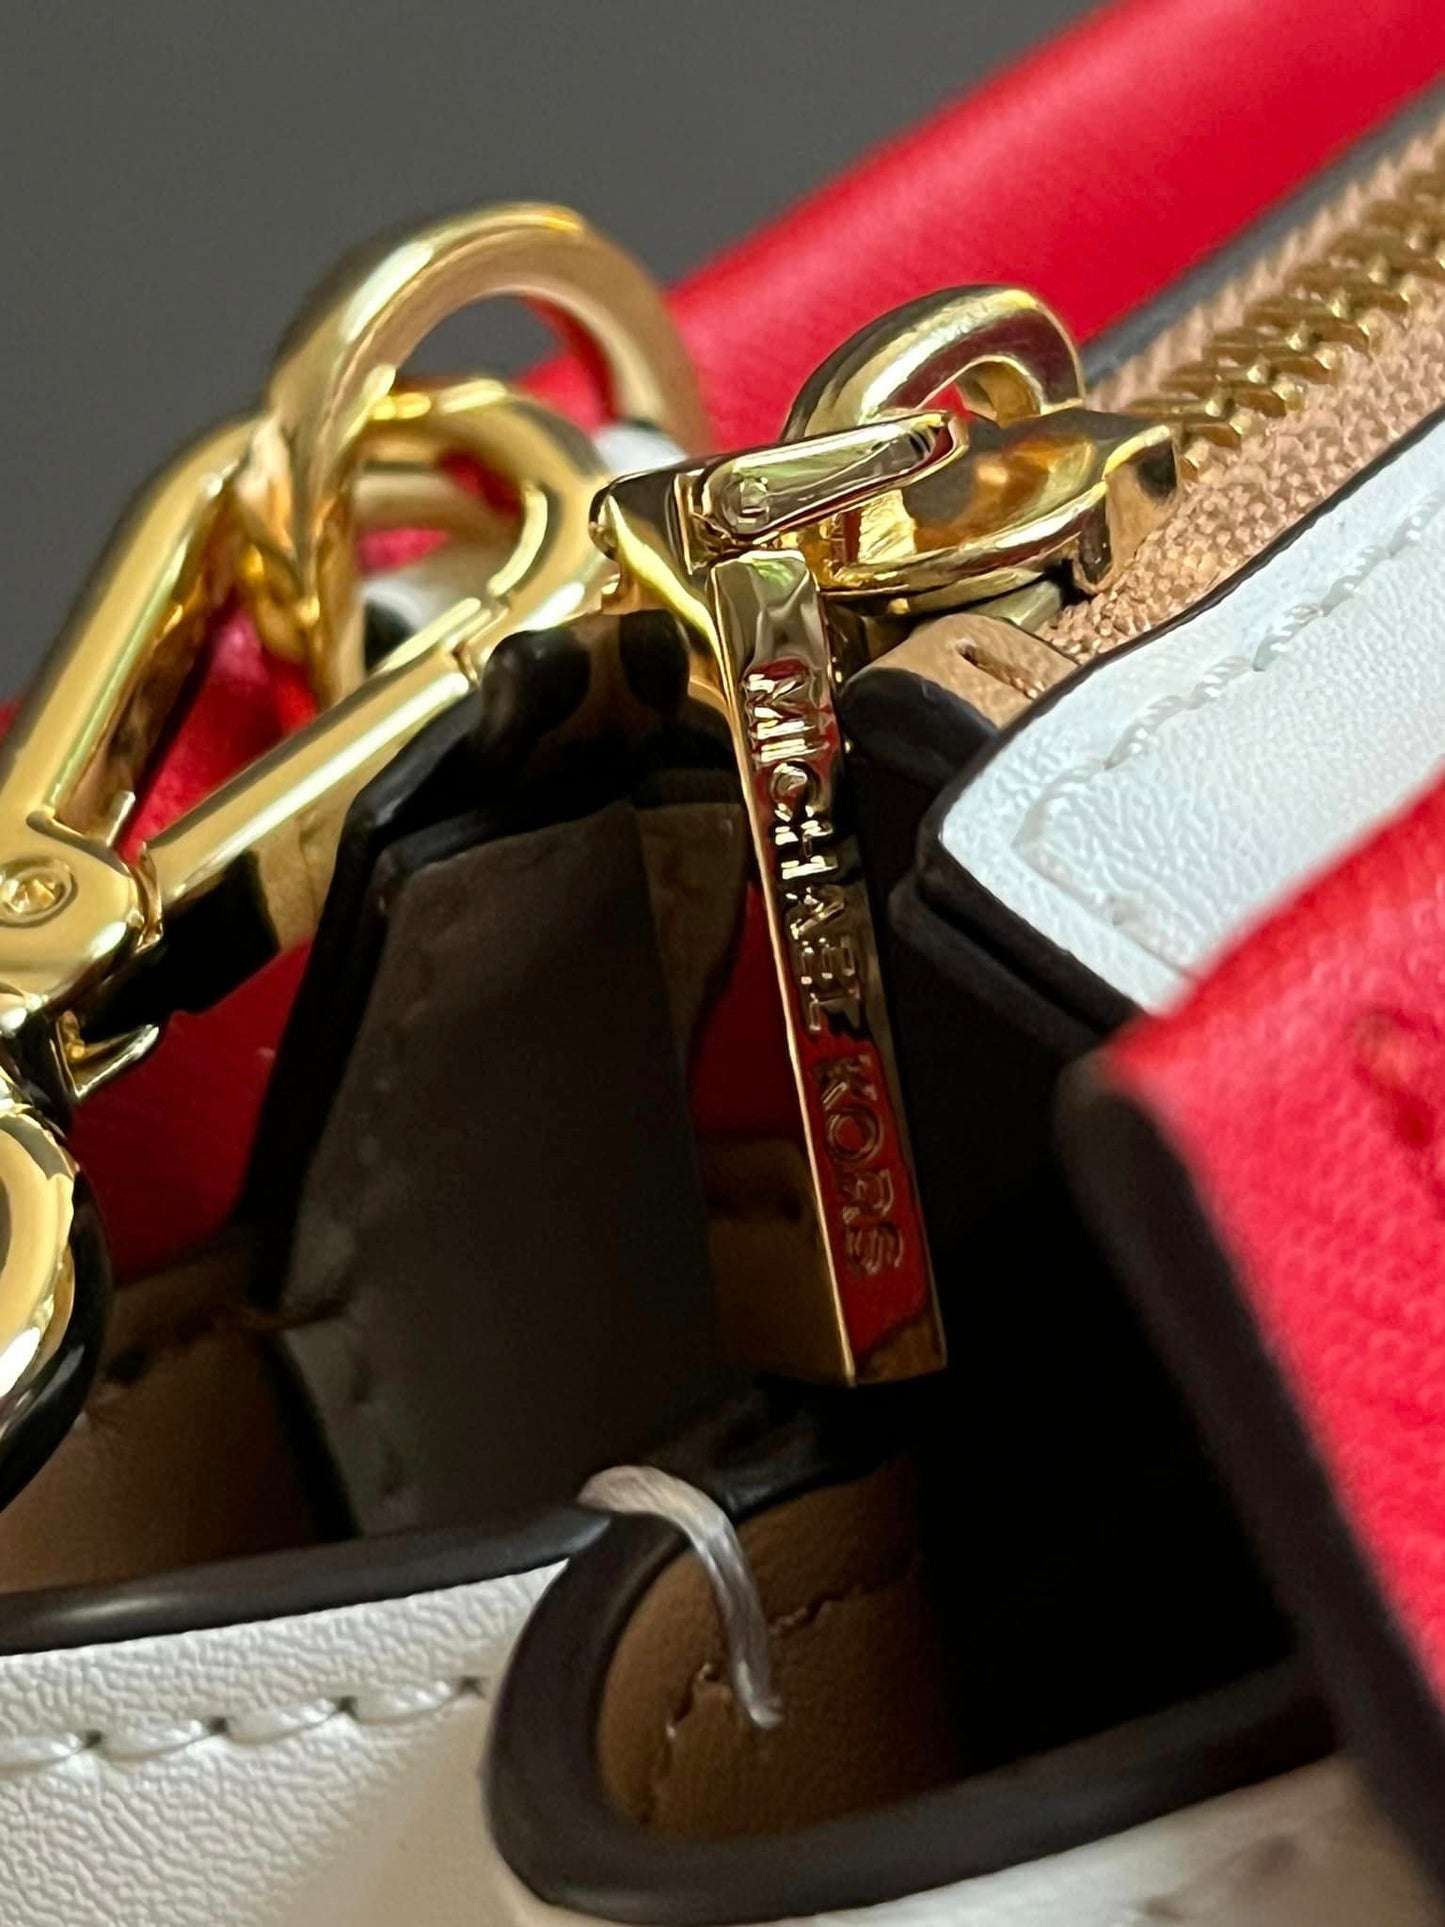 Michael Kors Marilyn Small Color-Block Saffiano Leather Crossbody Bag